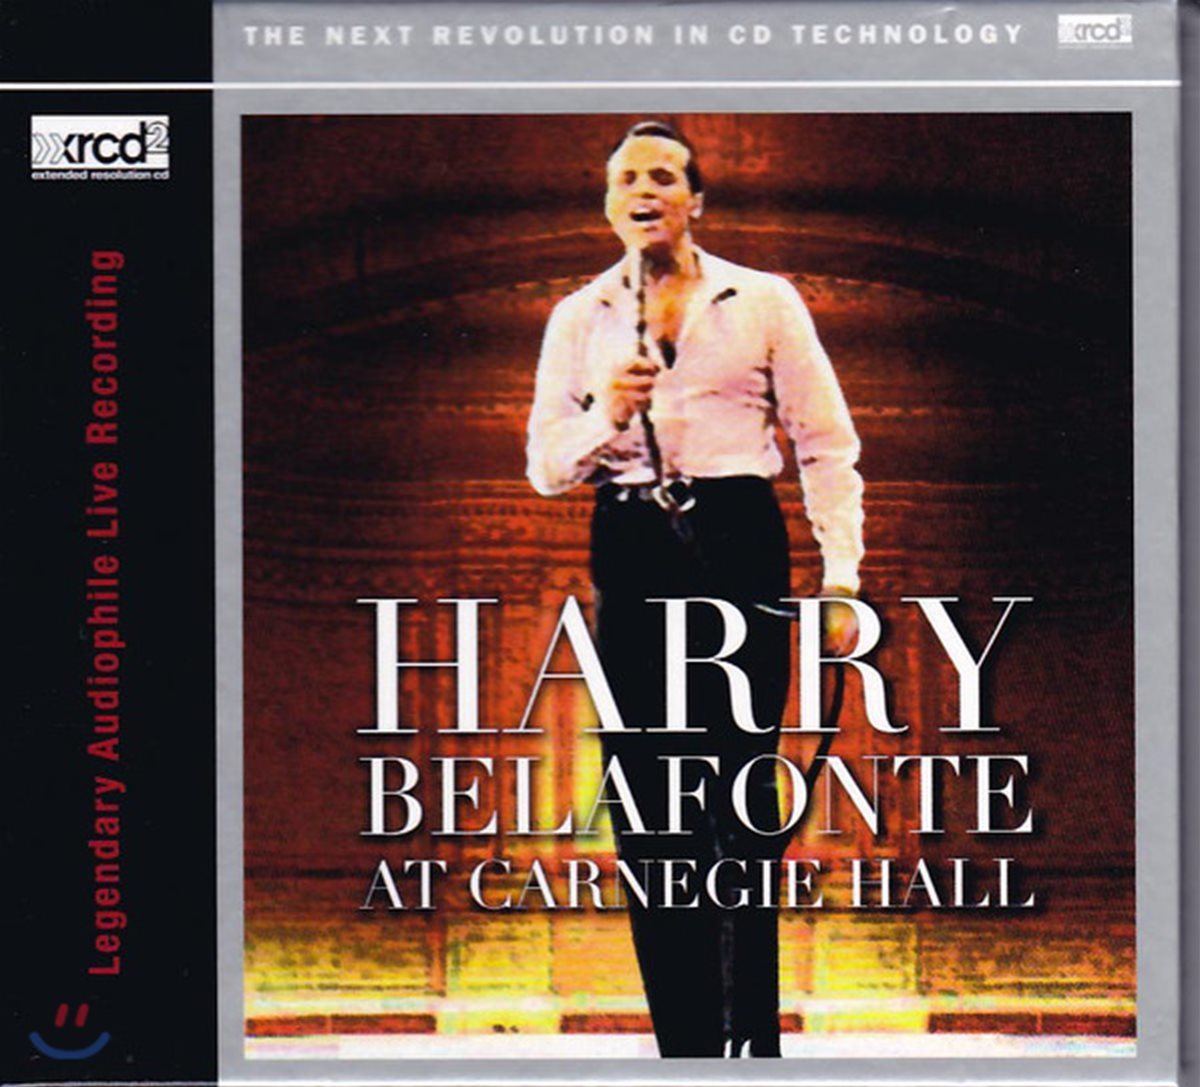 Harry Belafonte - At Carnegie Hall 해리 벨라폰테 1959년 카네기홀 실황 [XRCD]